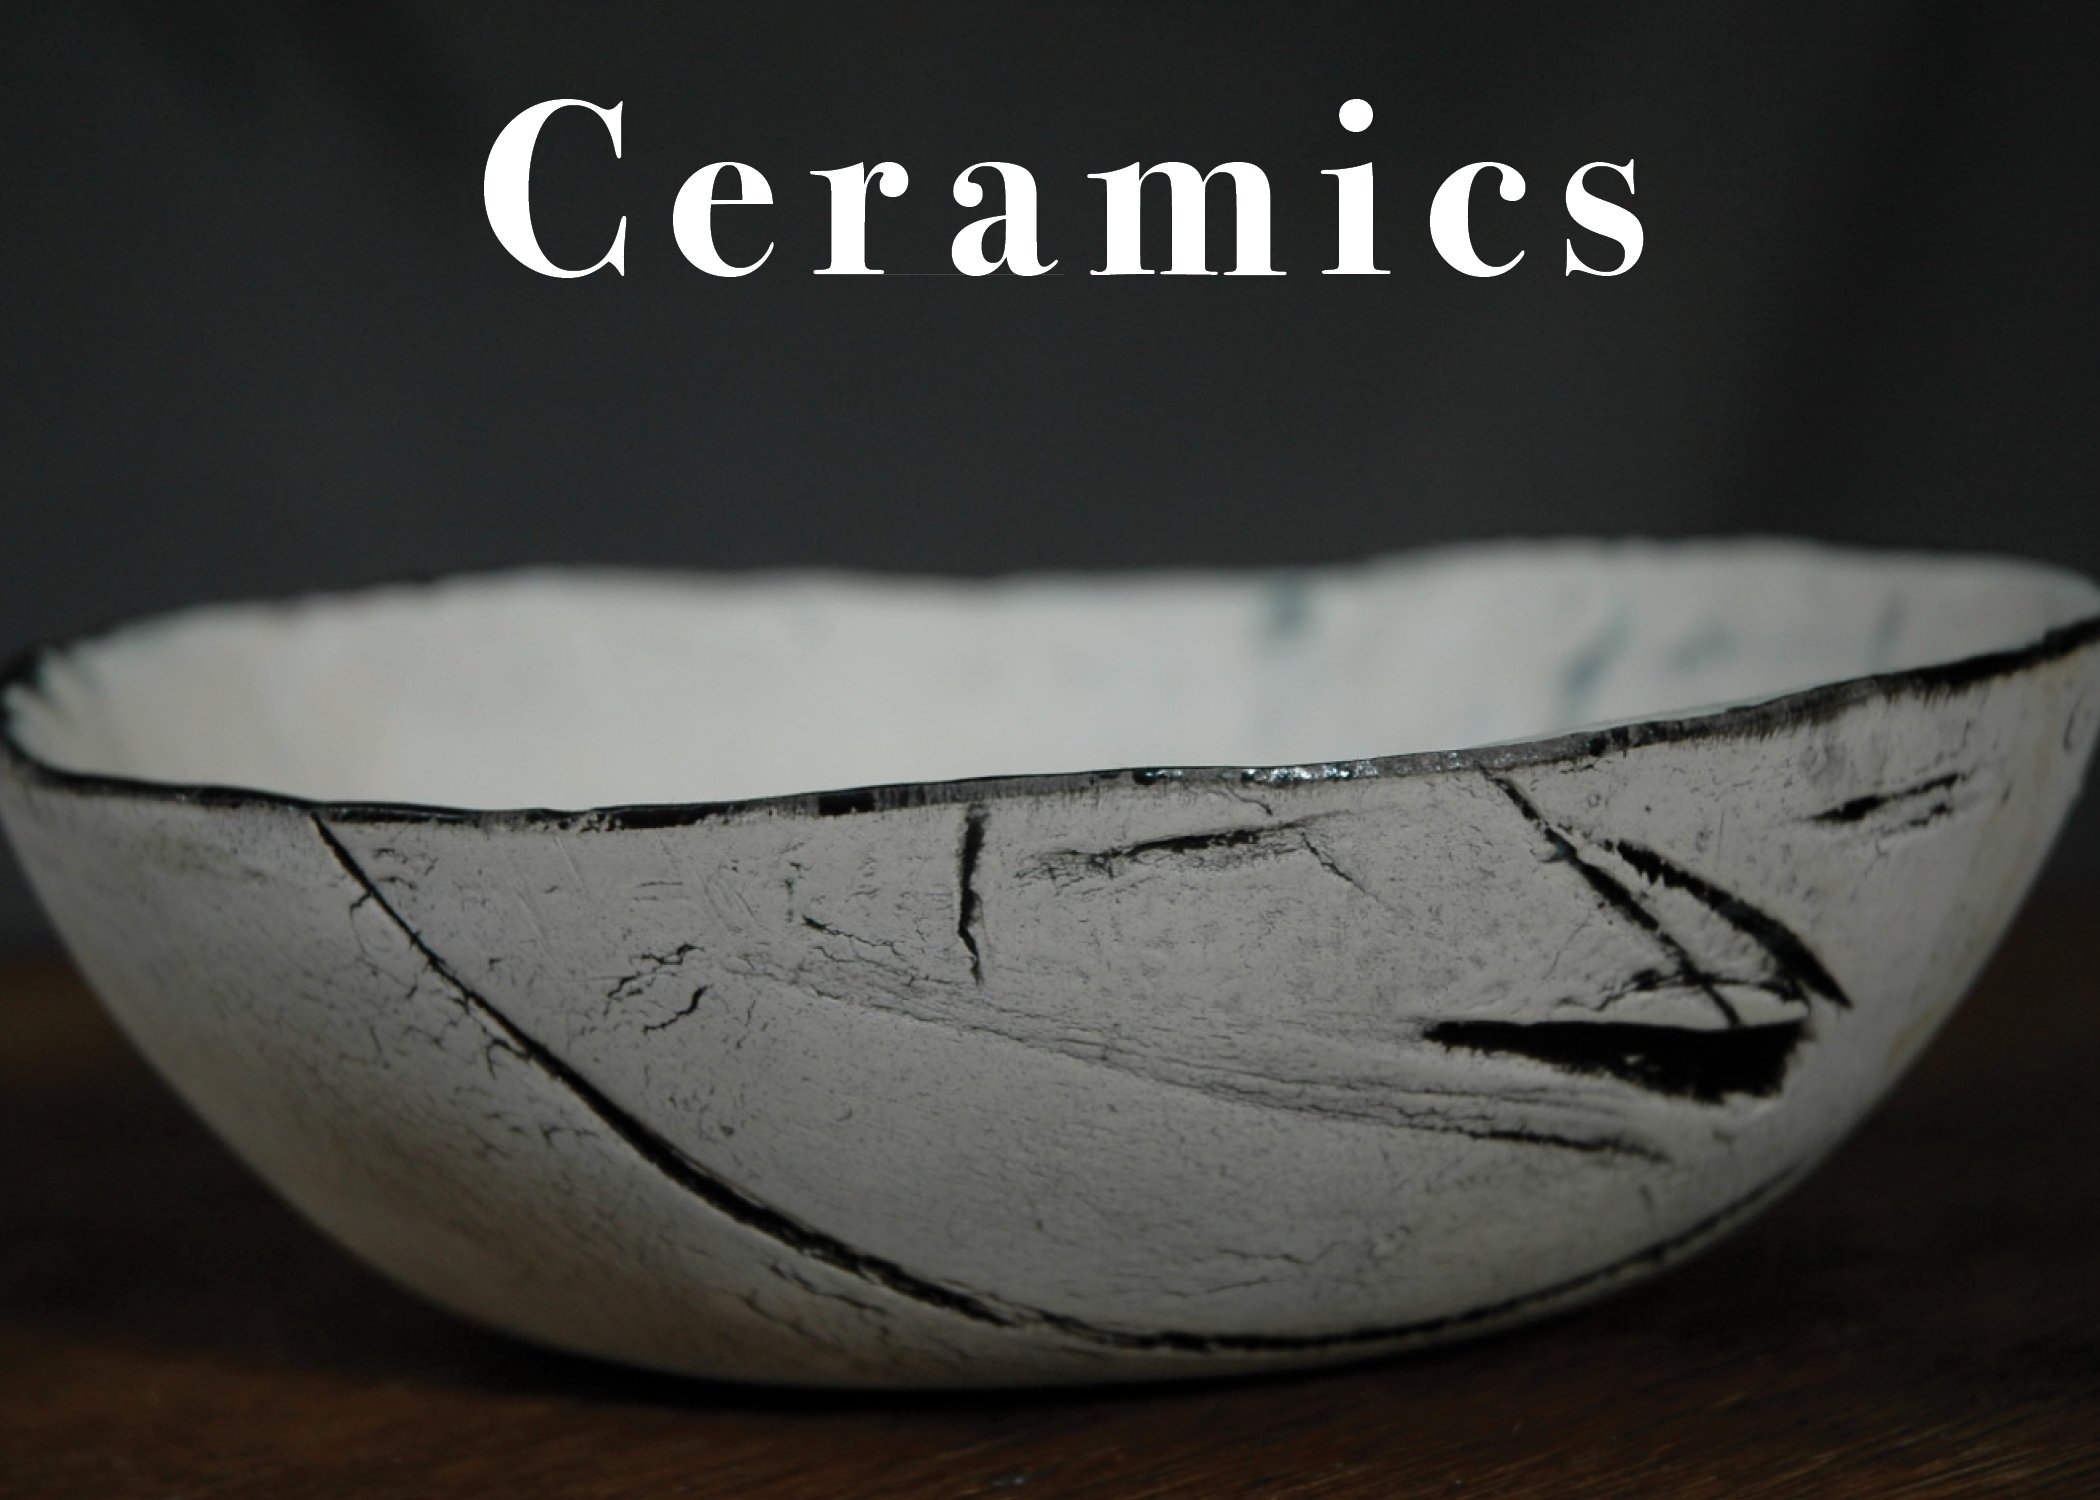 Ceramics cover image for website top 2.jpg